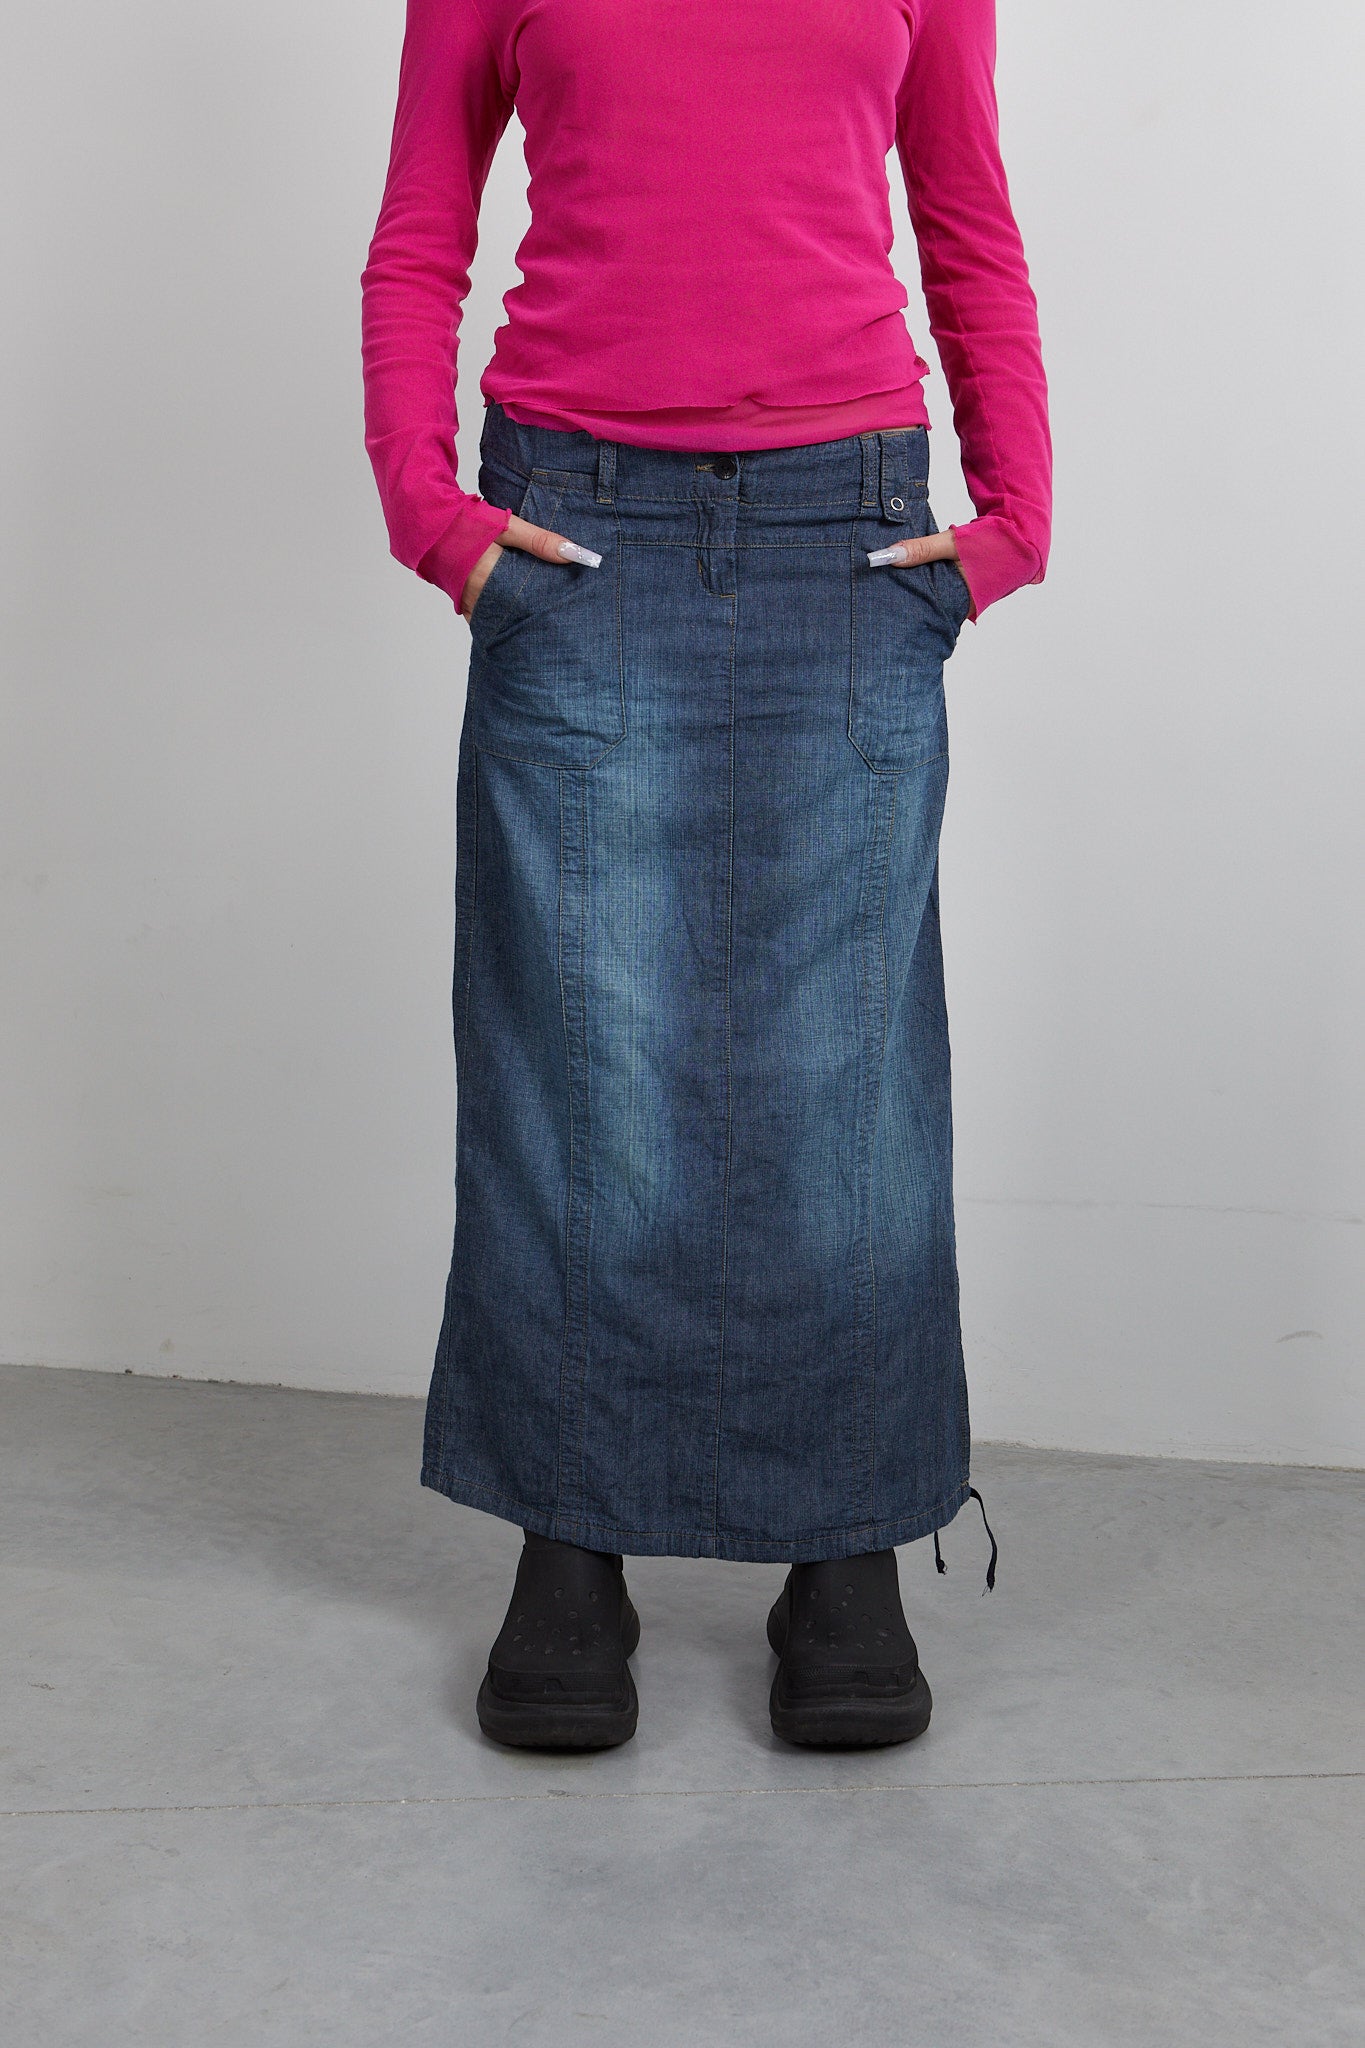 Skirts - Buy Short, Mini & Long Skirts Online for Women at Myntra